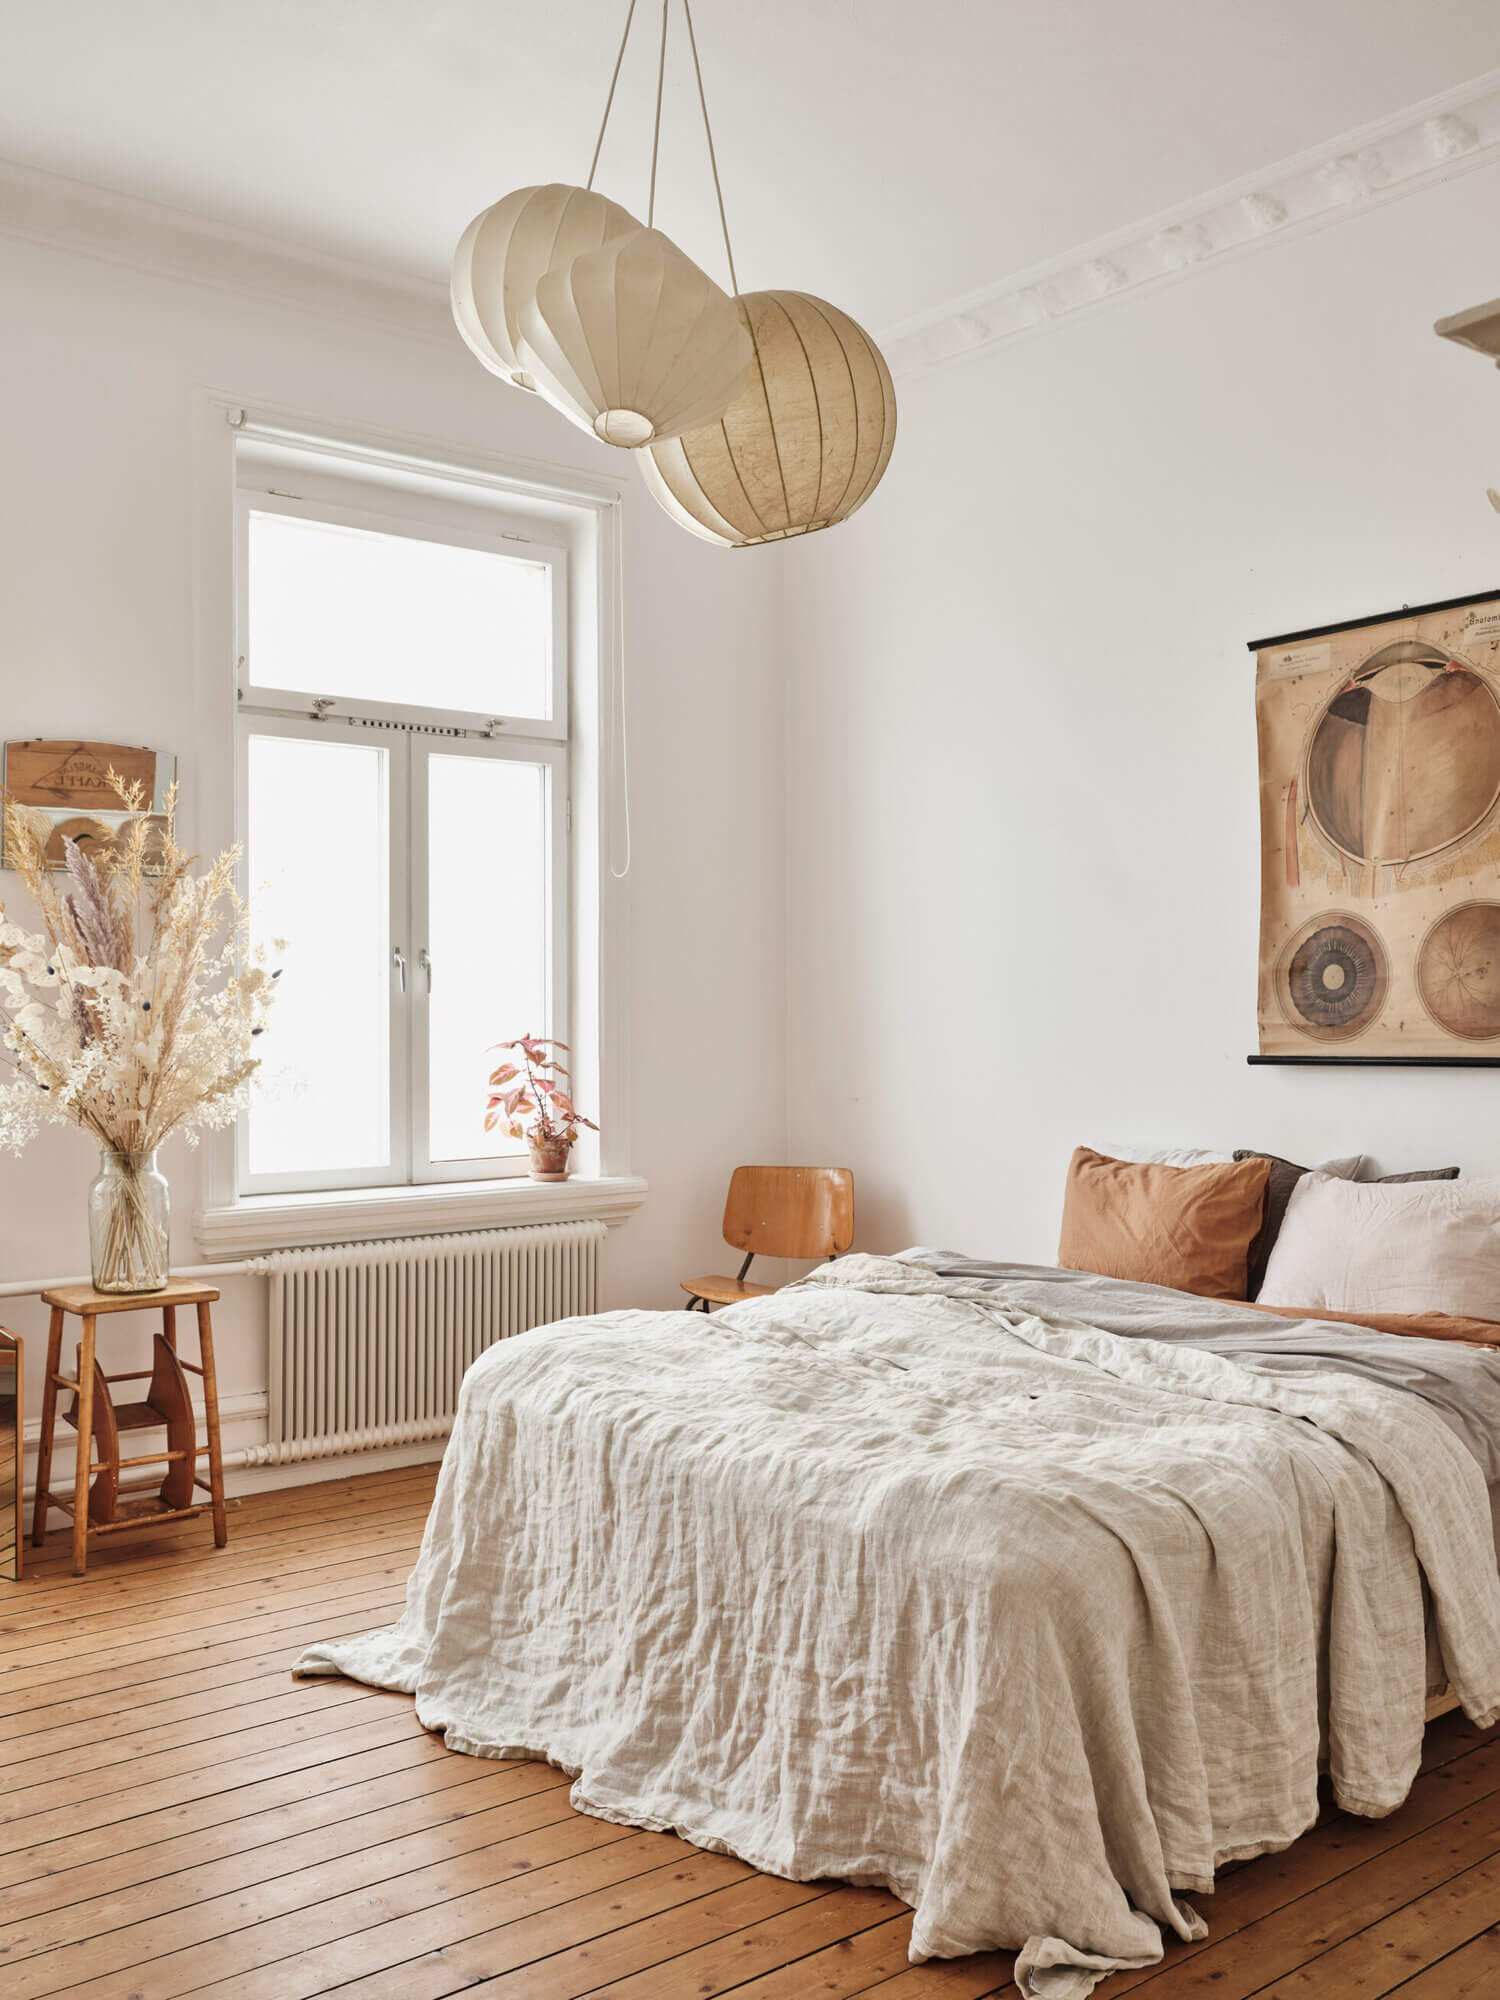 natural materials swedish apartment nordroom7 Natural Materials in a Calm Swedish Apartment